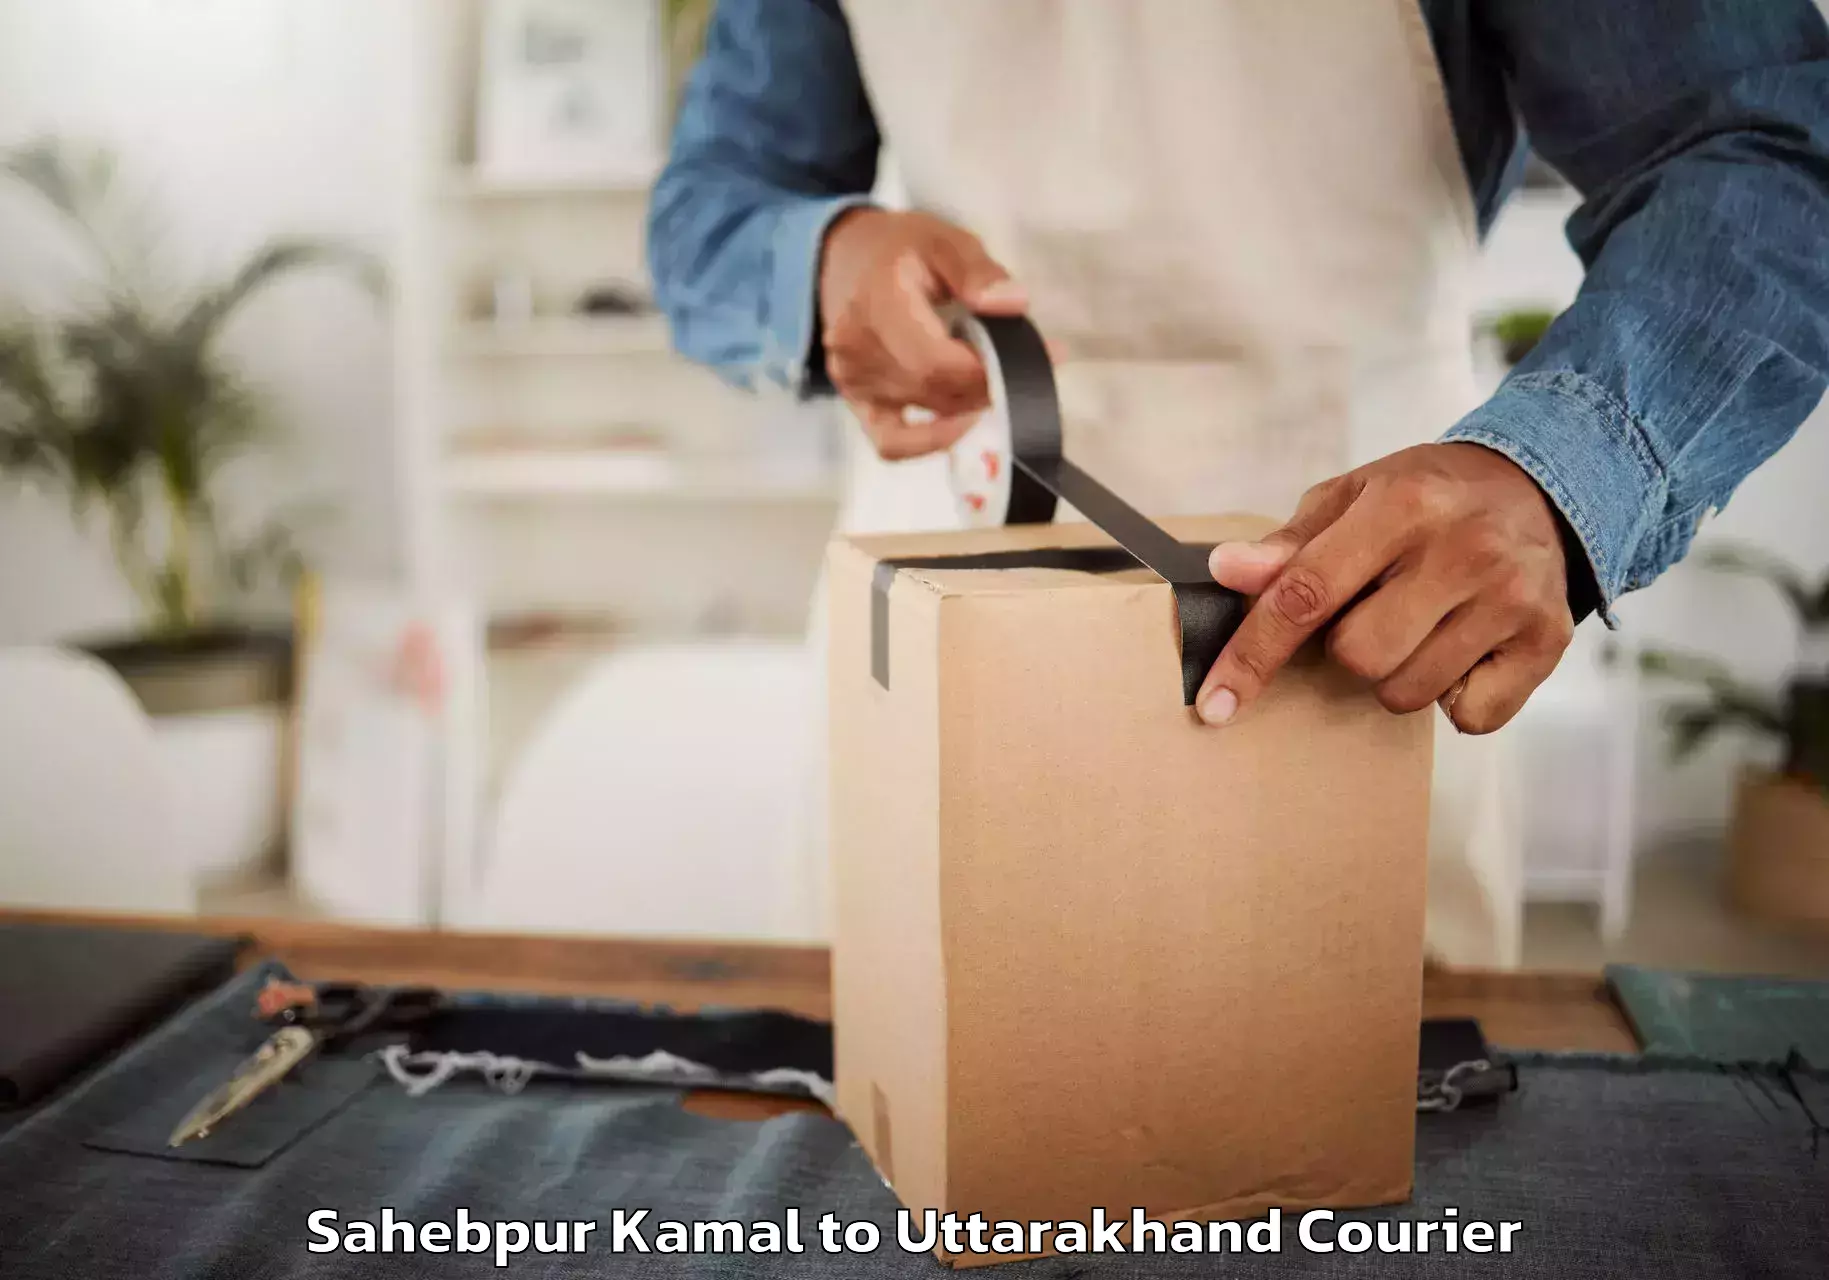 Furniture delivery service Sahebpur Kamal to Roorkee